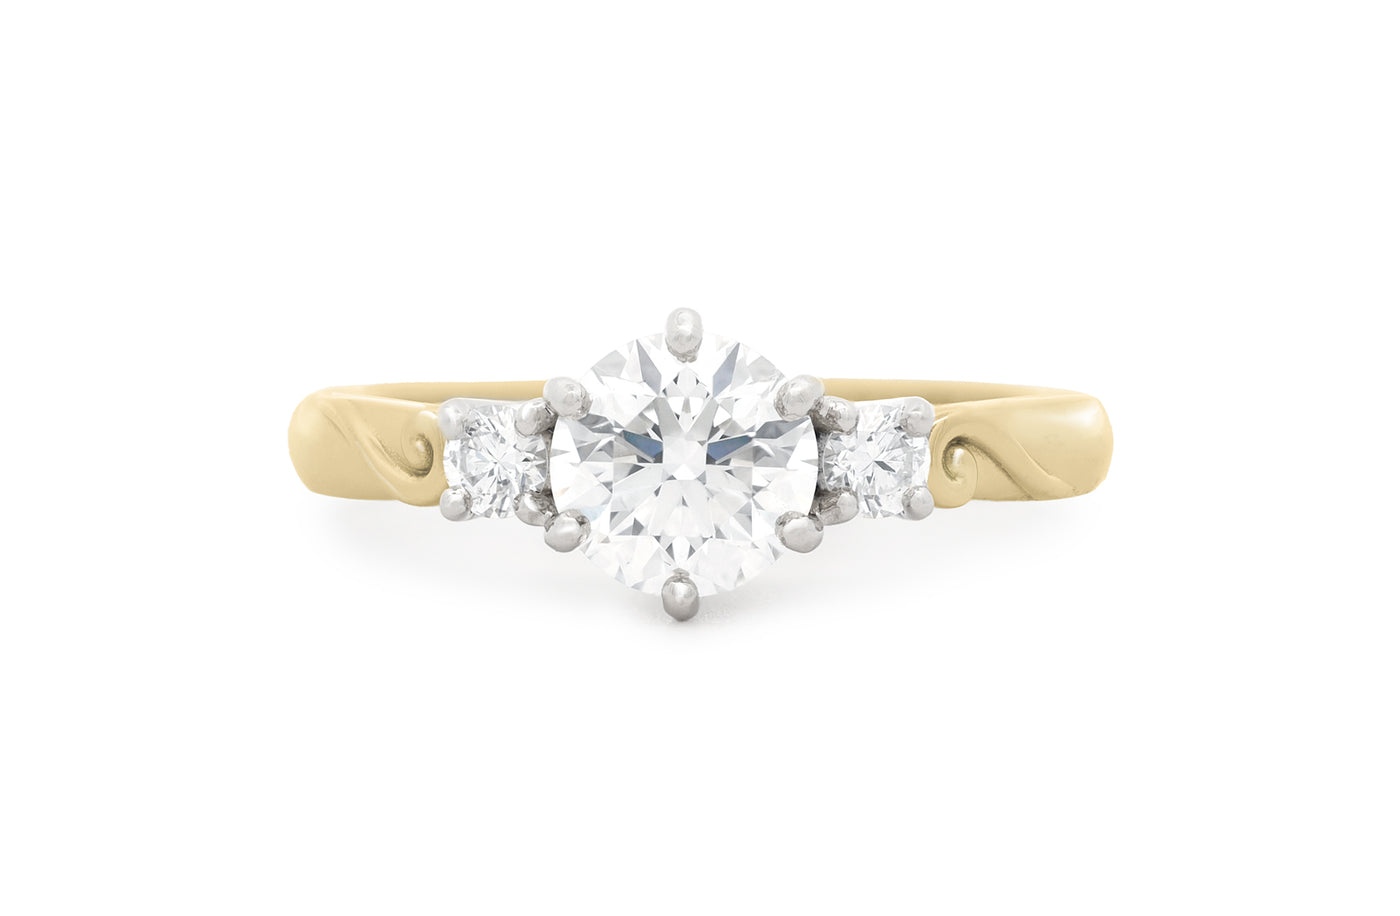 Awa: Brilliant Cut Diamond Three Stone Ring in Yellow Gold and Platinum